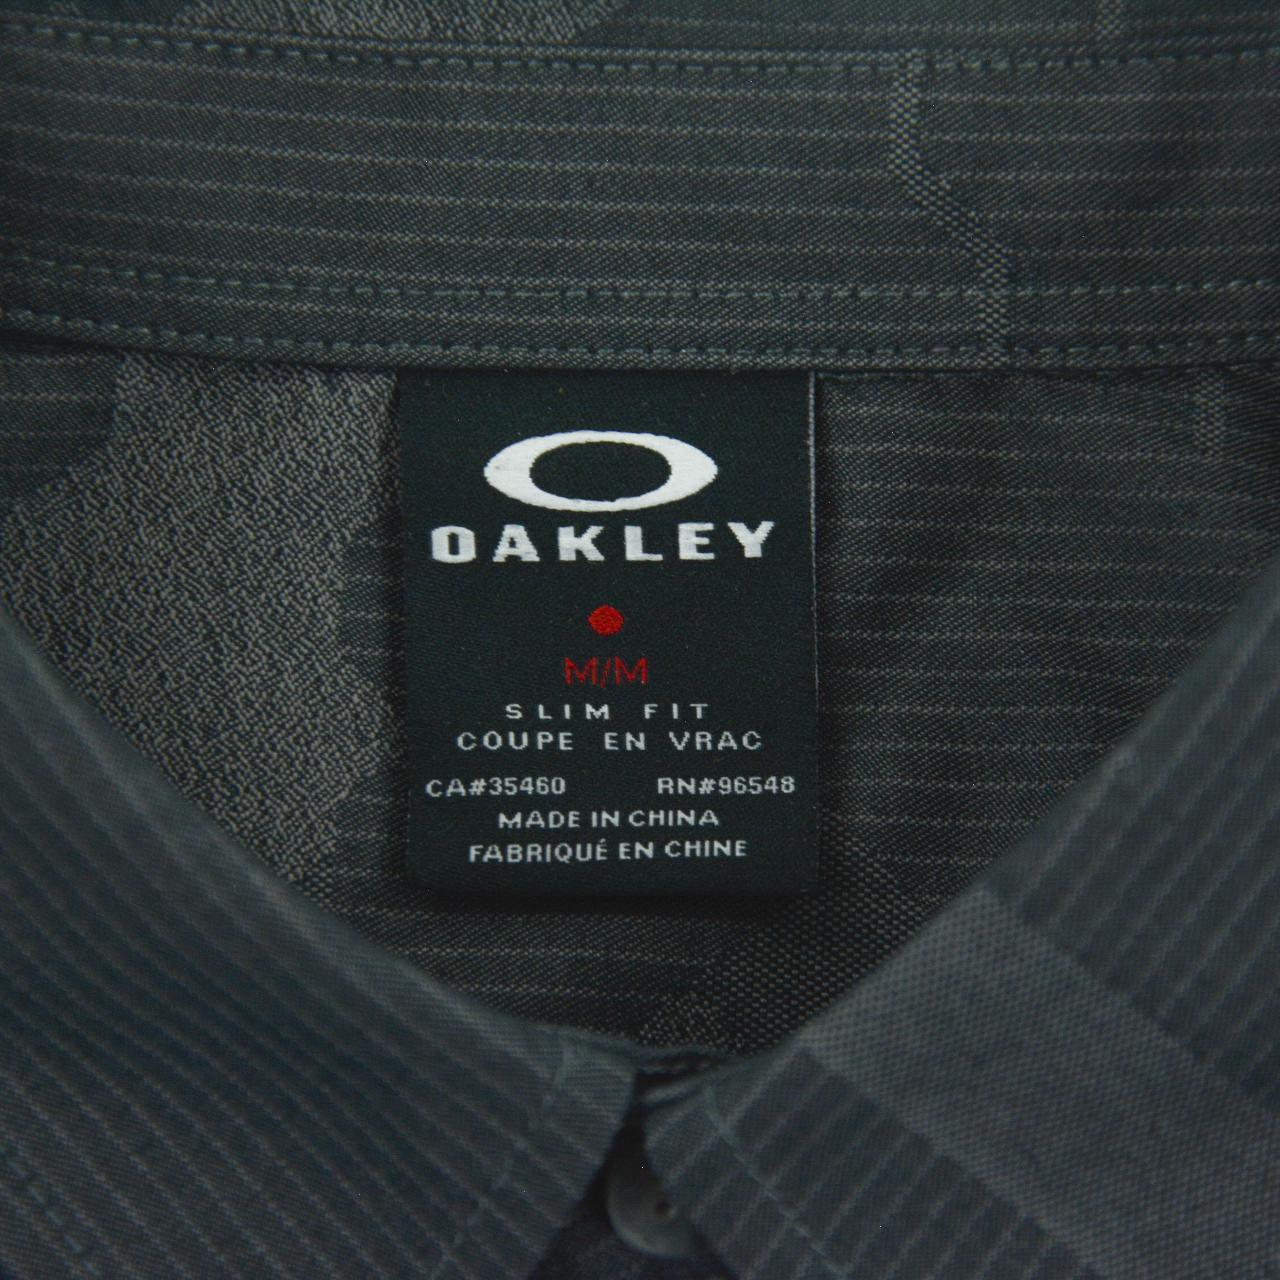 Vintage Oakley Camo Shirt Size M - Known Source